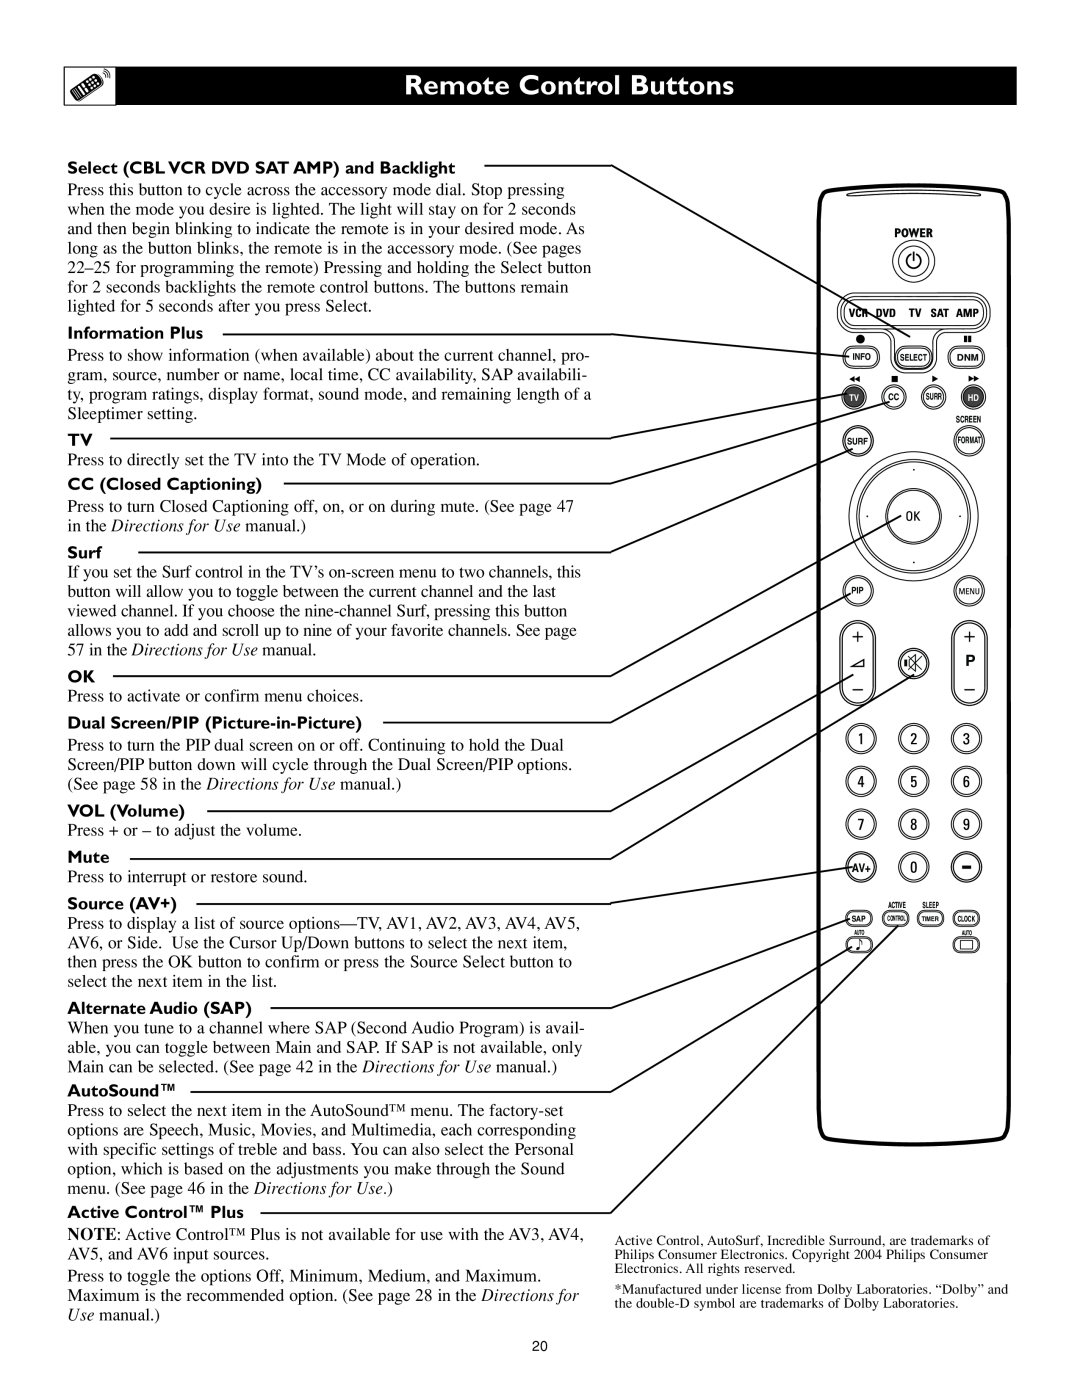 Philips 62PL9524, 55PL9524 setup guide Remote Control Buttons 